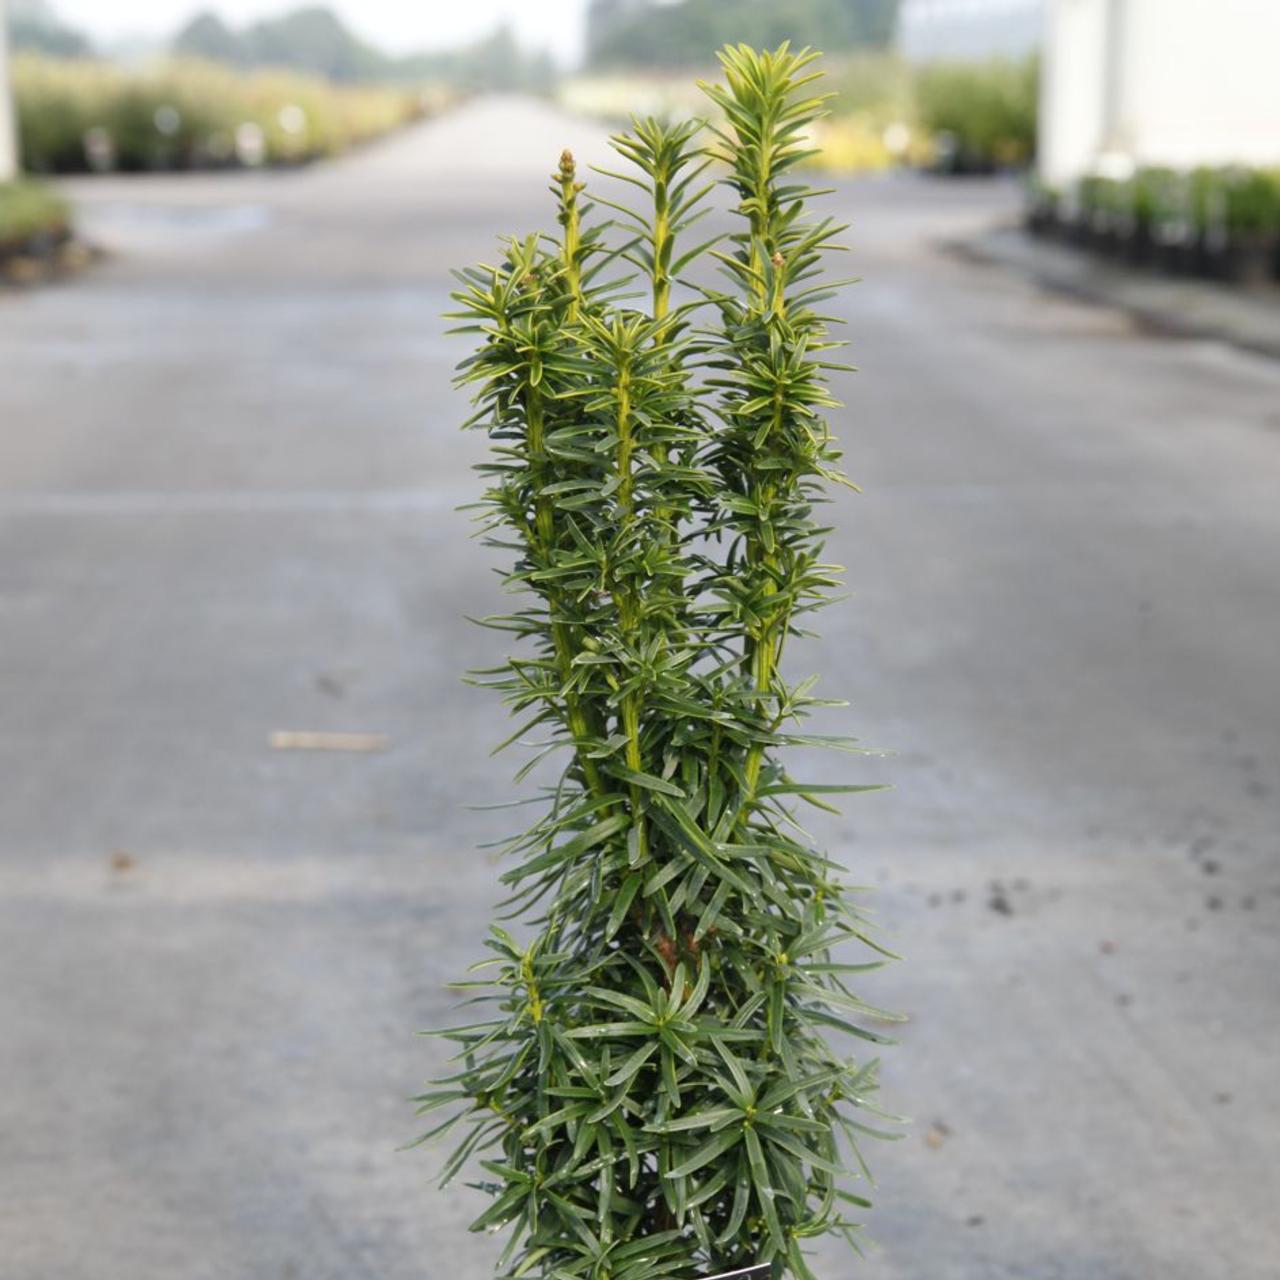 Taxus baccata 'David' plant